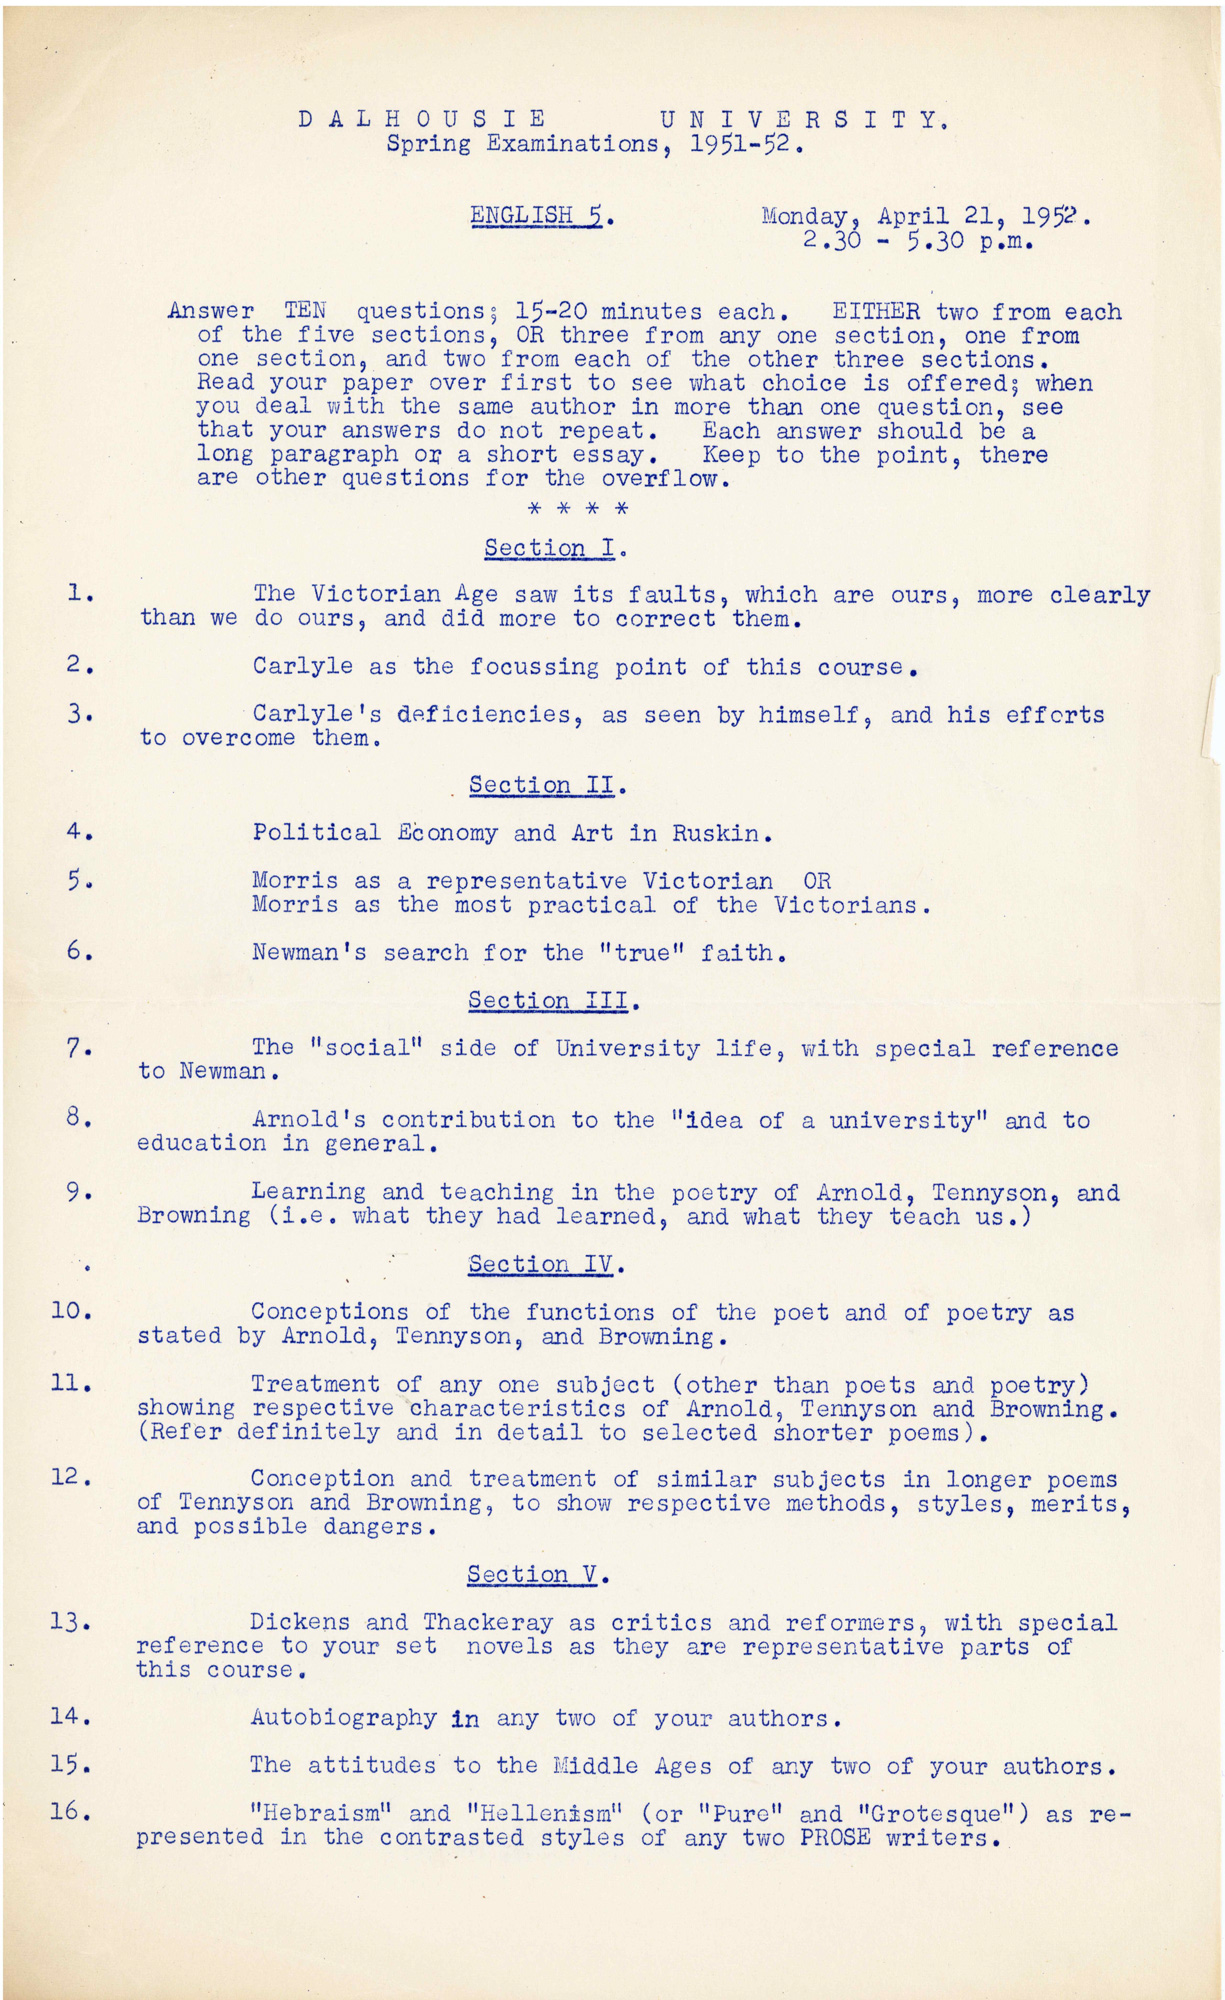 1951 English examination